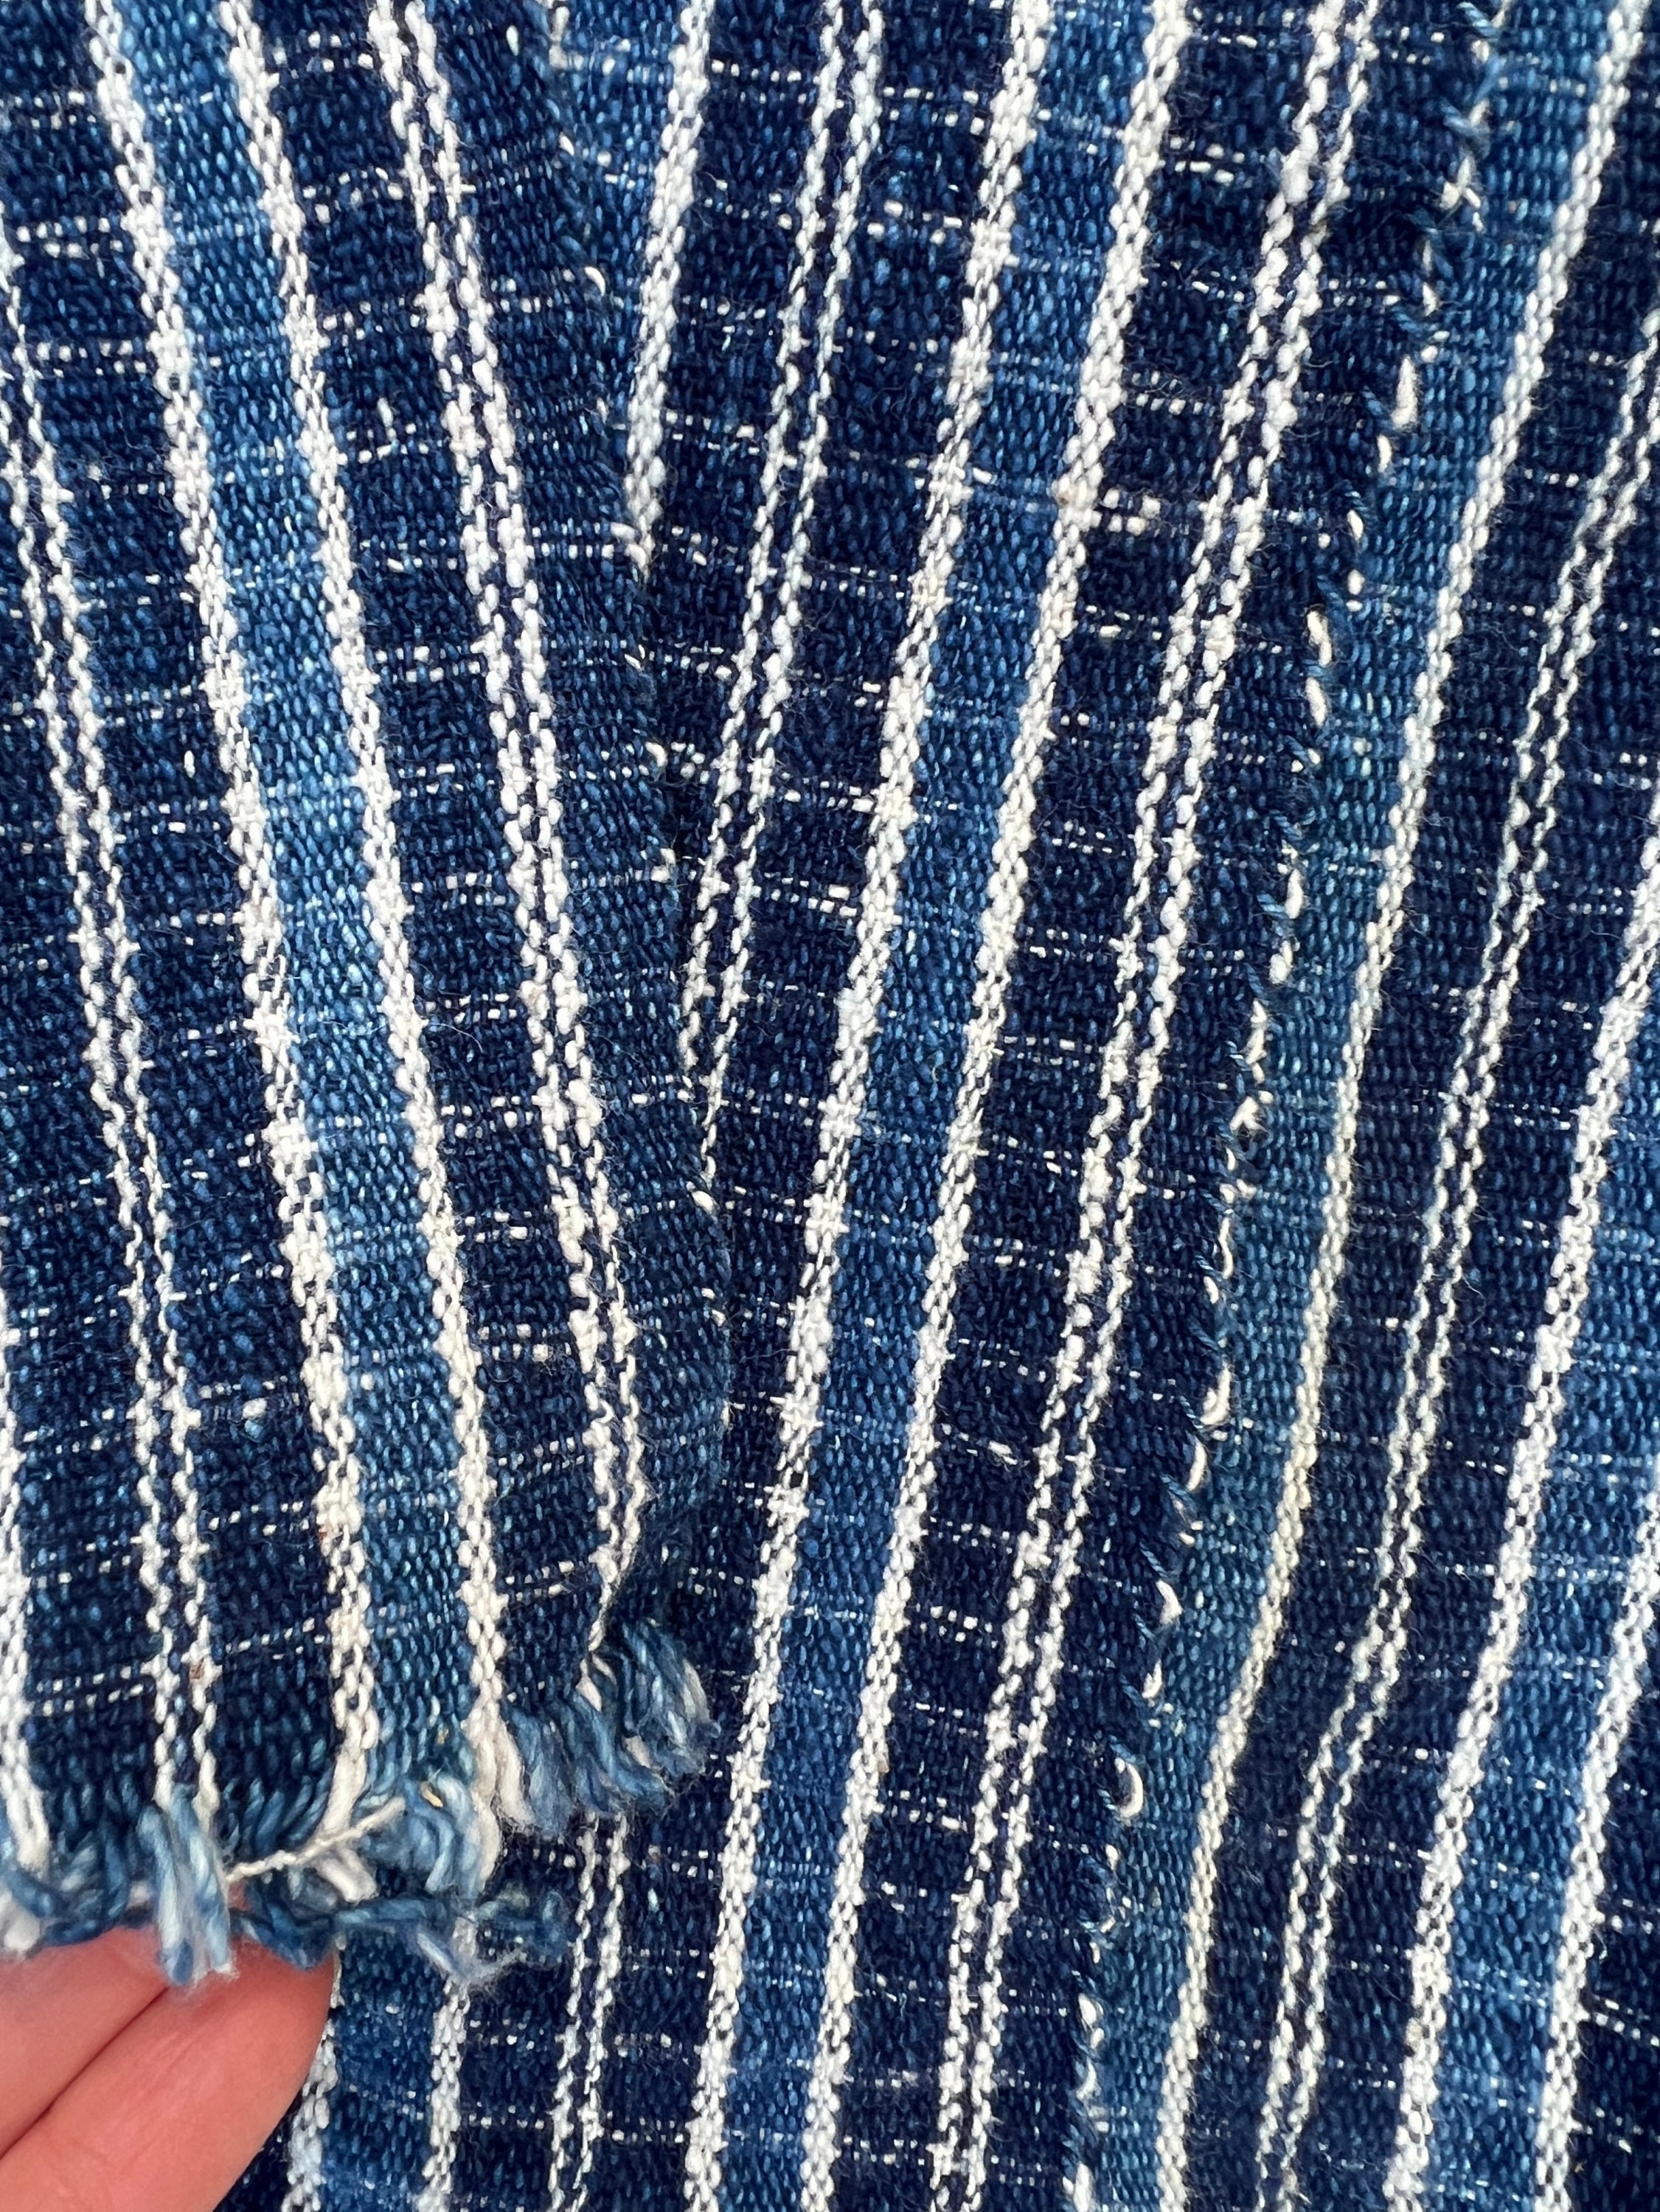 Blue Denim Fabric Jeans